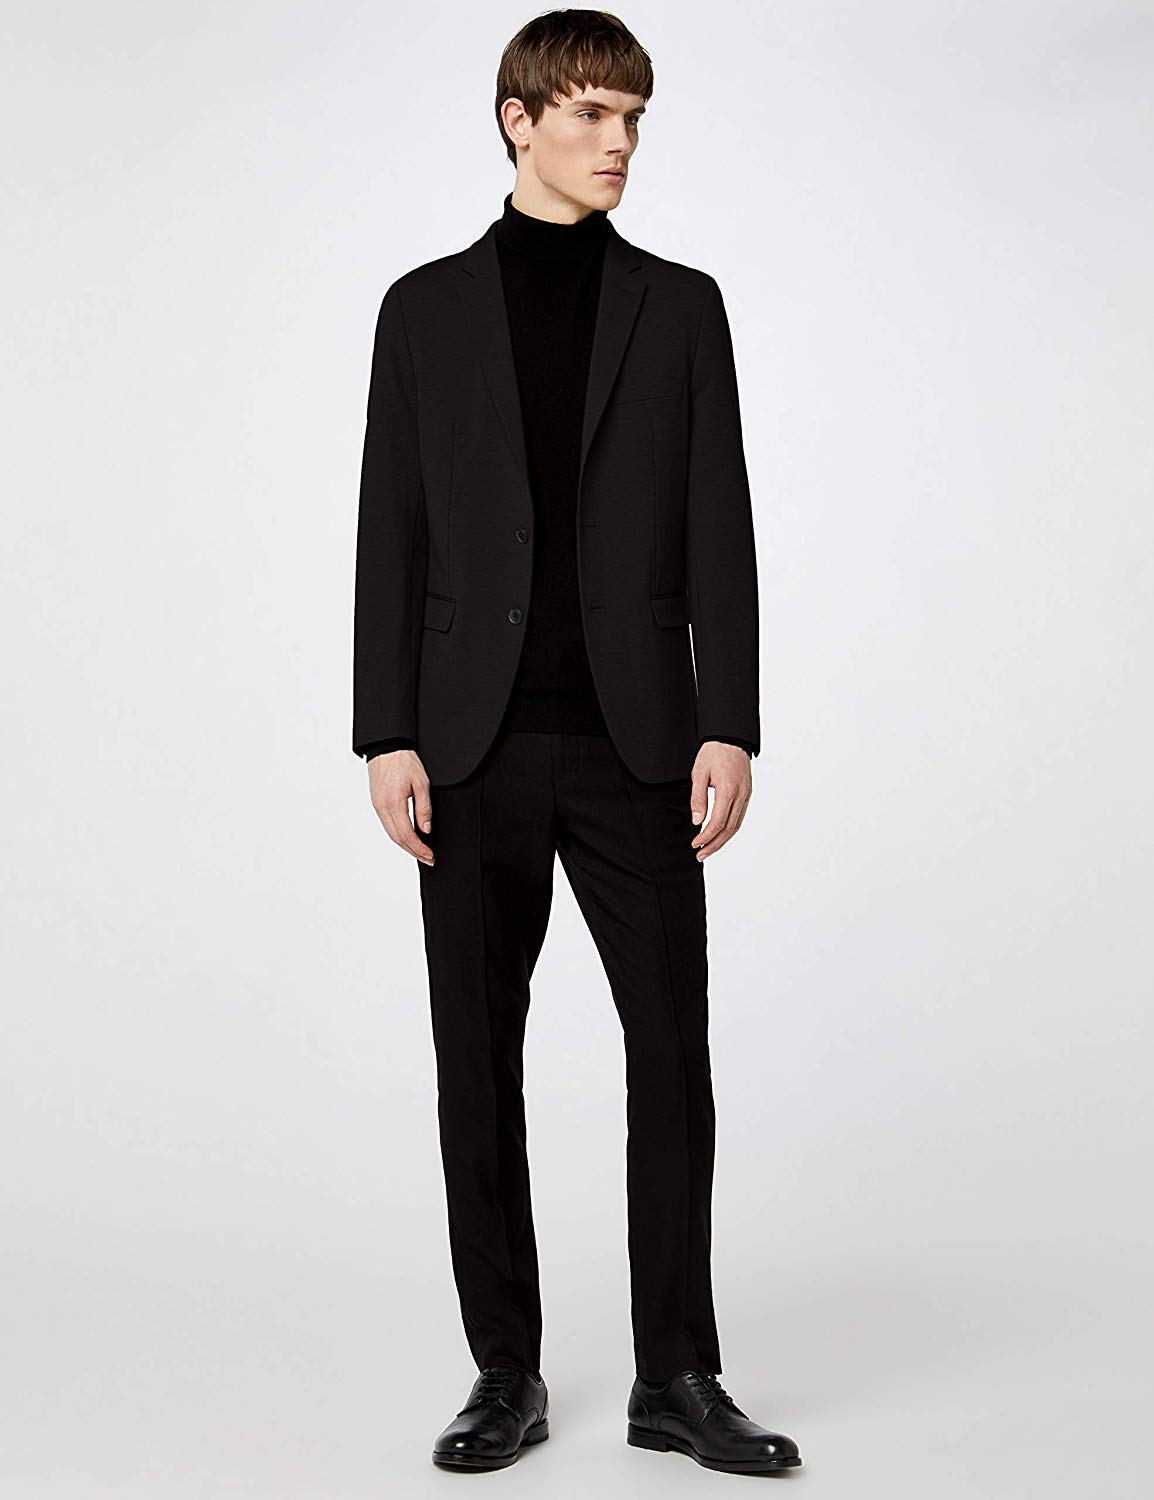 MERAKI Men's Casual Comfort Jersey Blazer, Black, XL, Black, Size XL ...